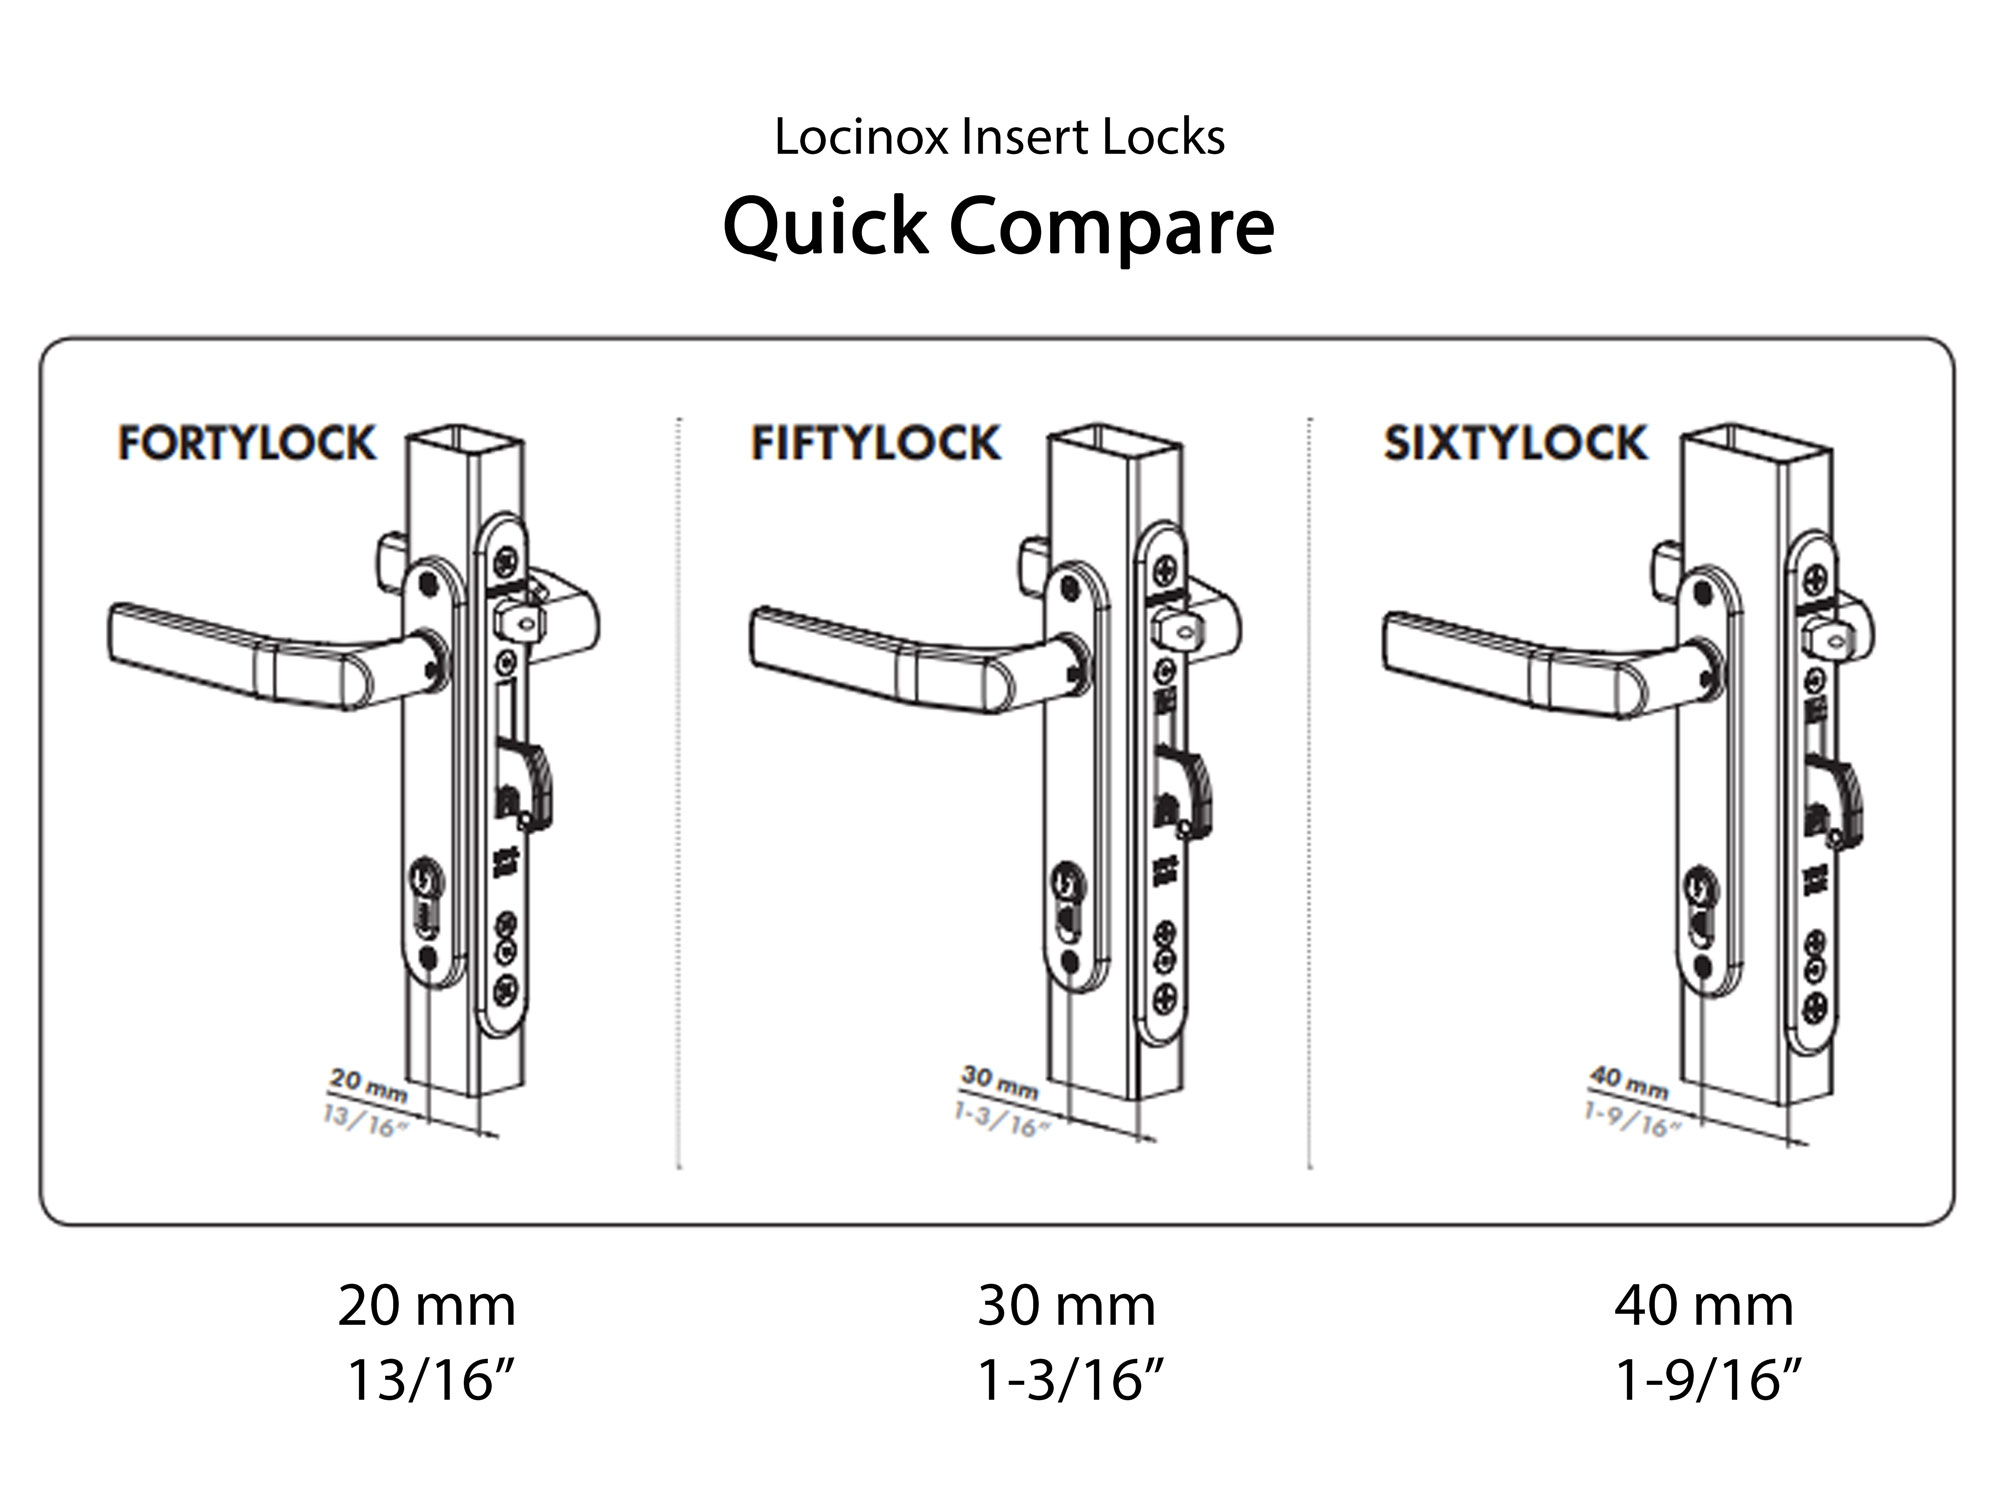 Locinox FORTYLOCK - Mortised lock with 20 mm (13/16”) Backset